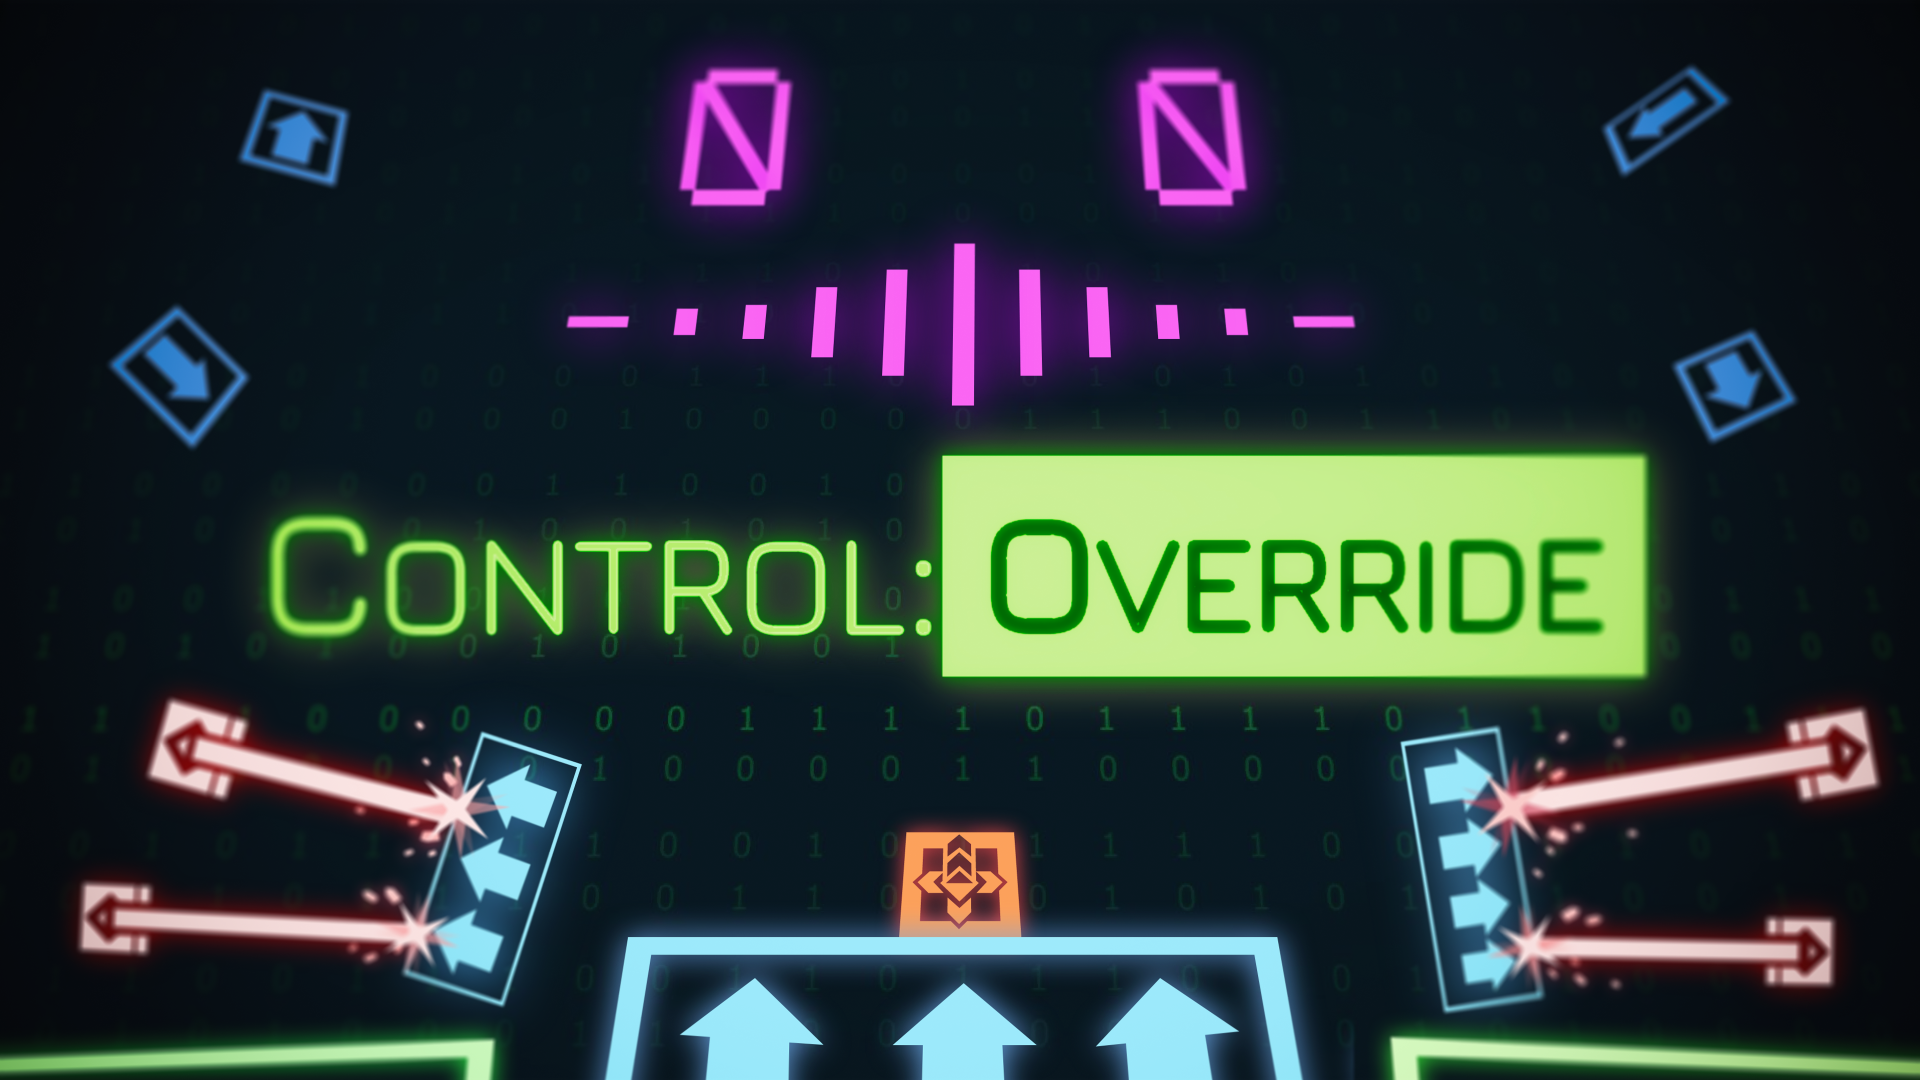 Control : Override